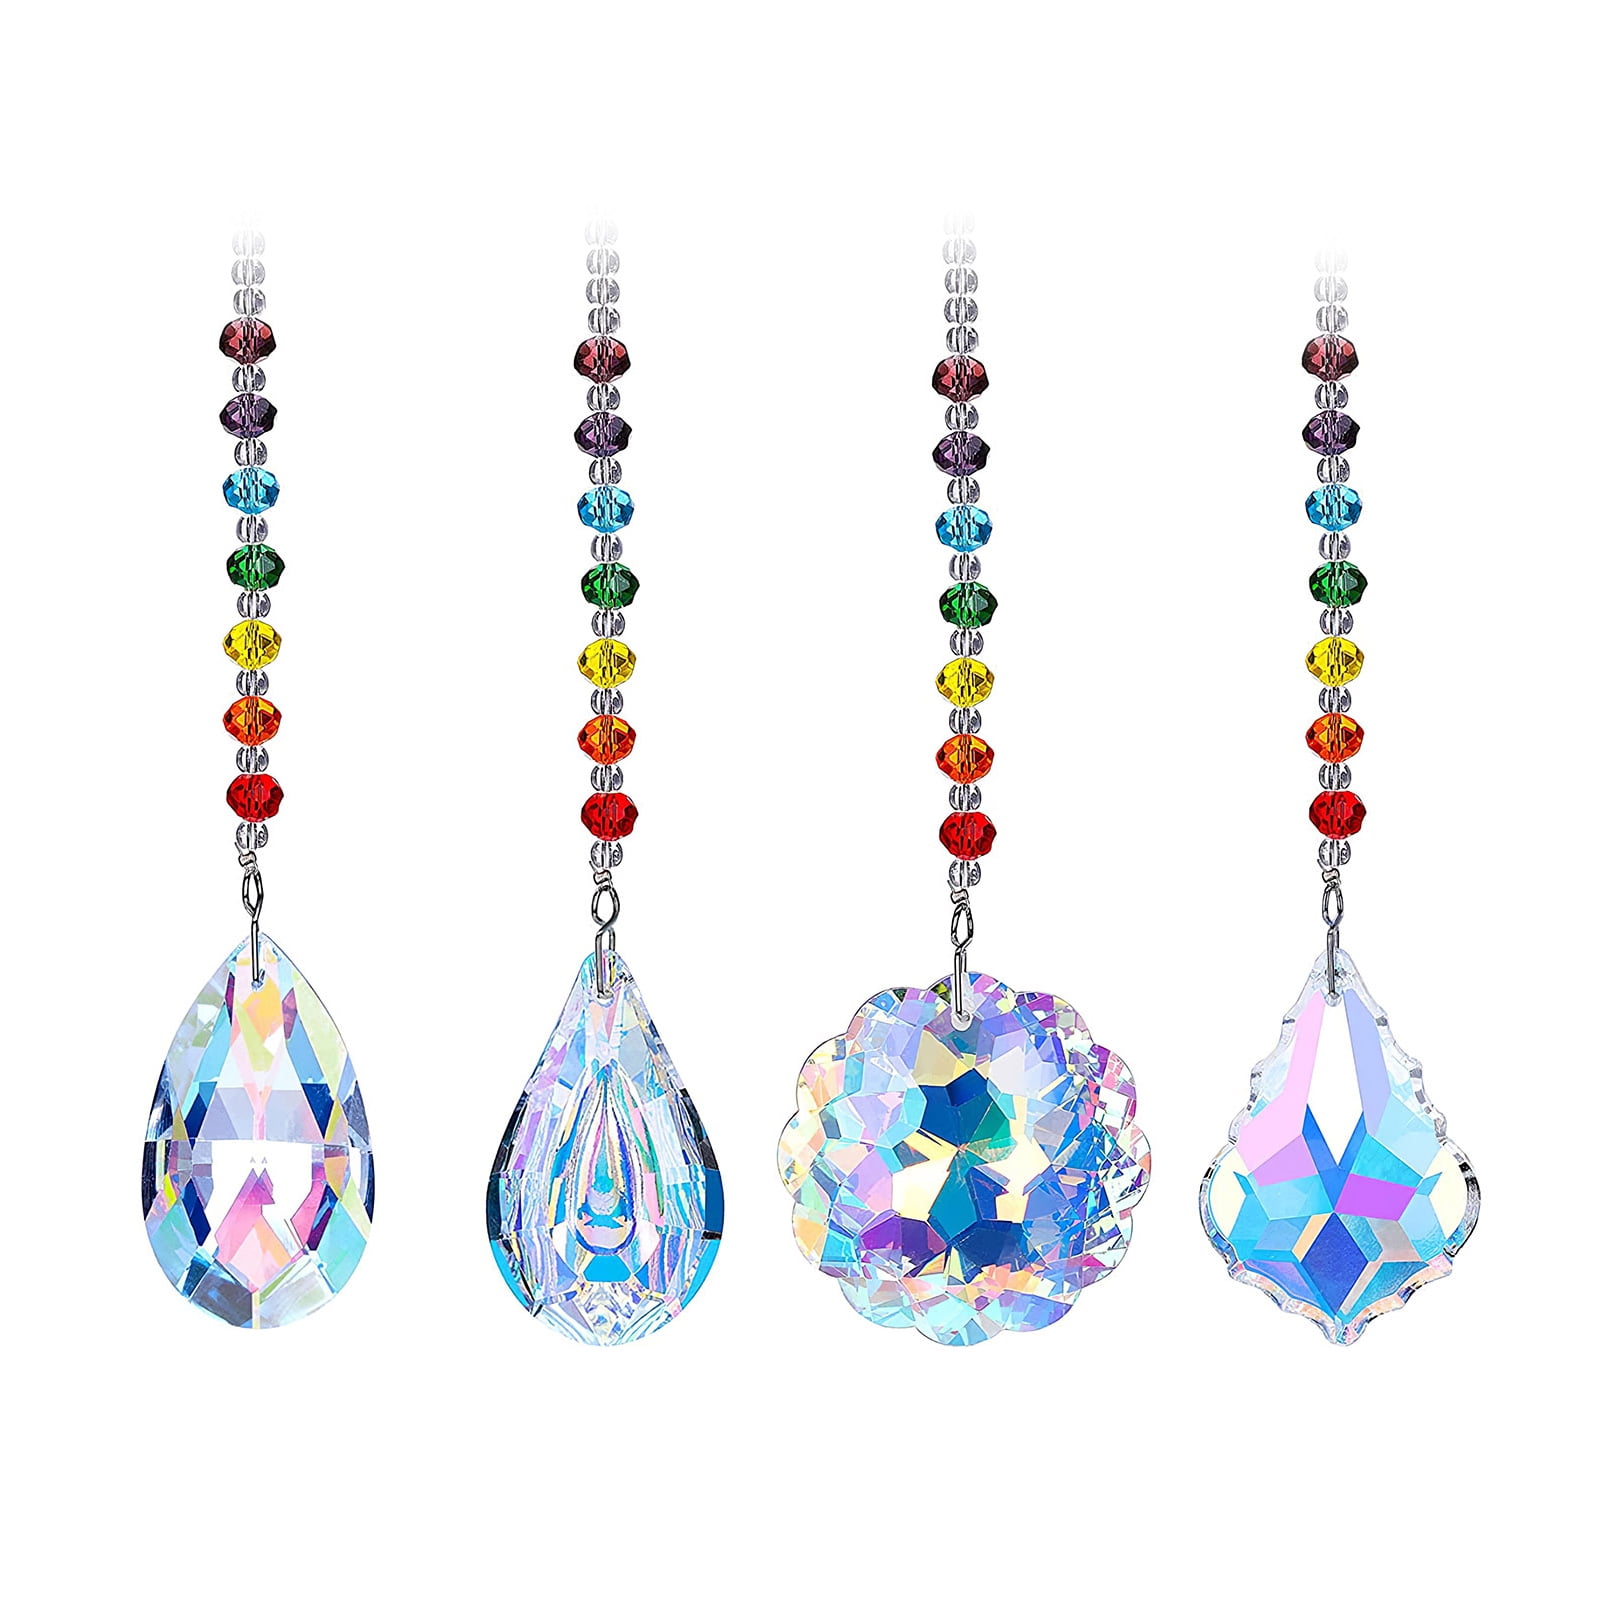 5" Crystal Suncatcher Feng Shui Prism Pendant Hanging Decor Ornament Chandelier 